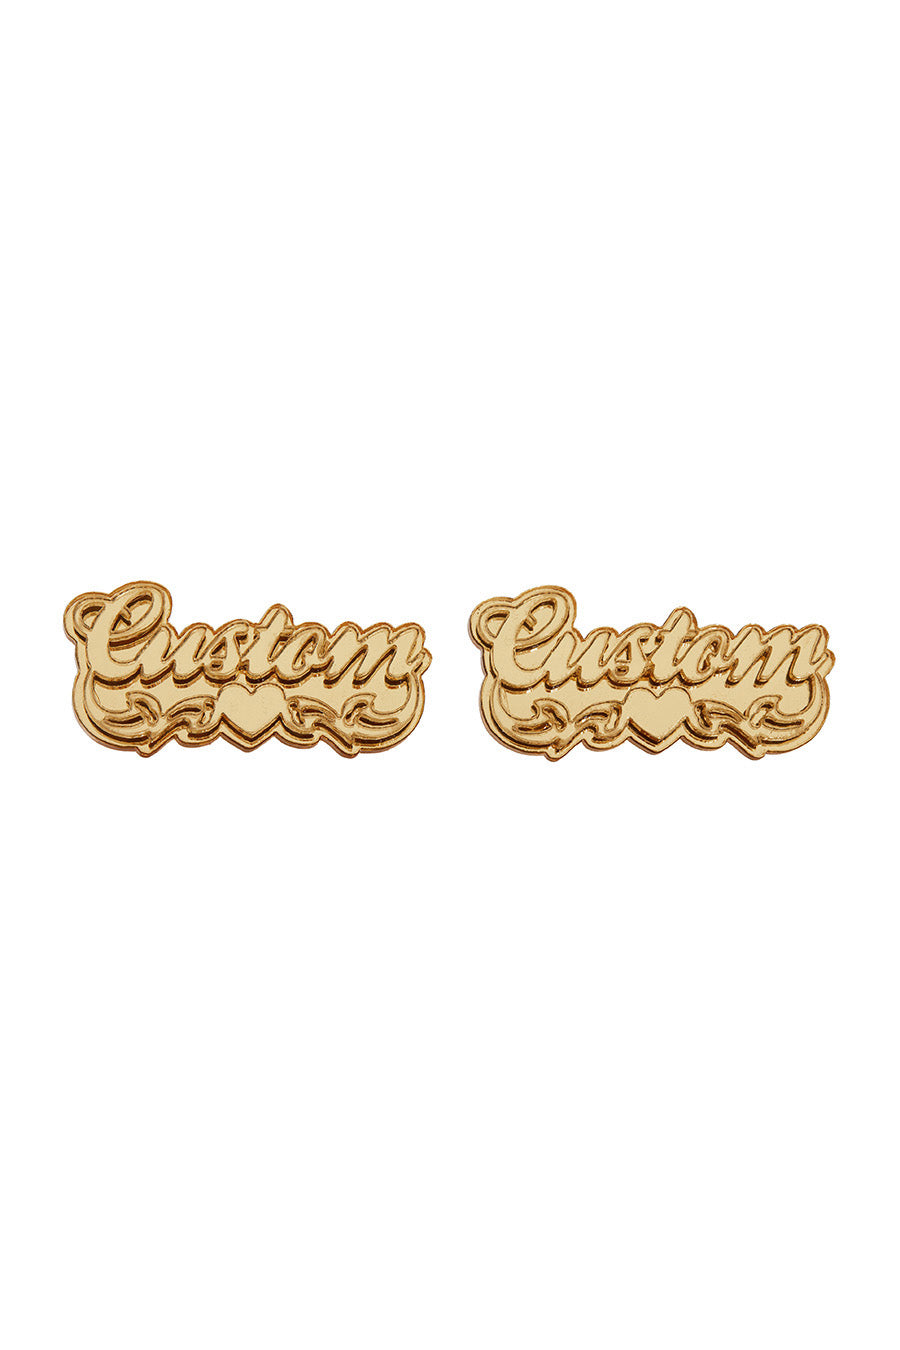 Personalized Custom Name Earrings